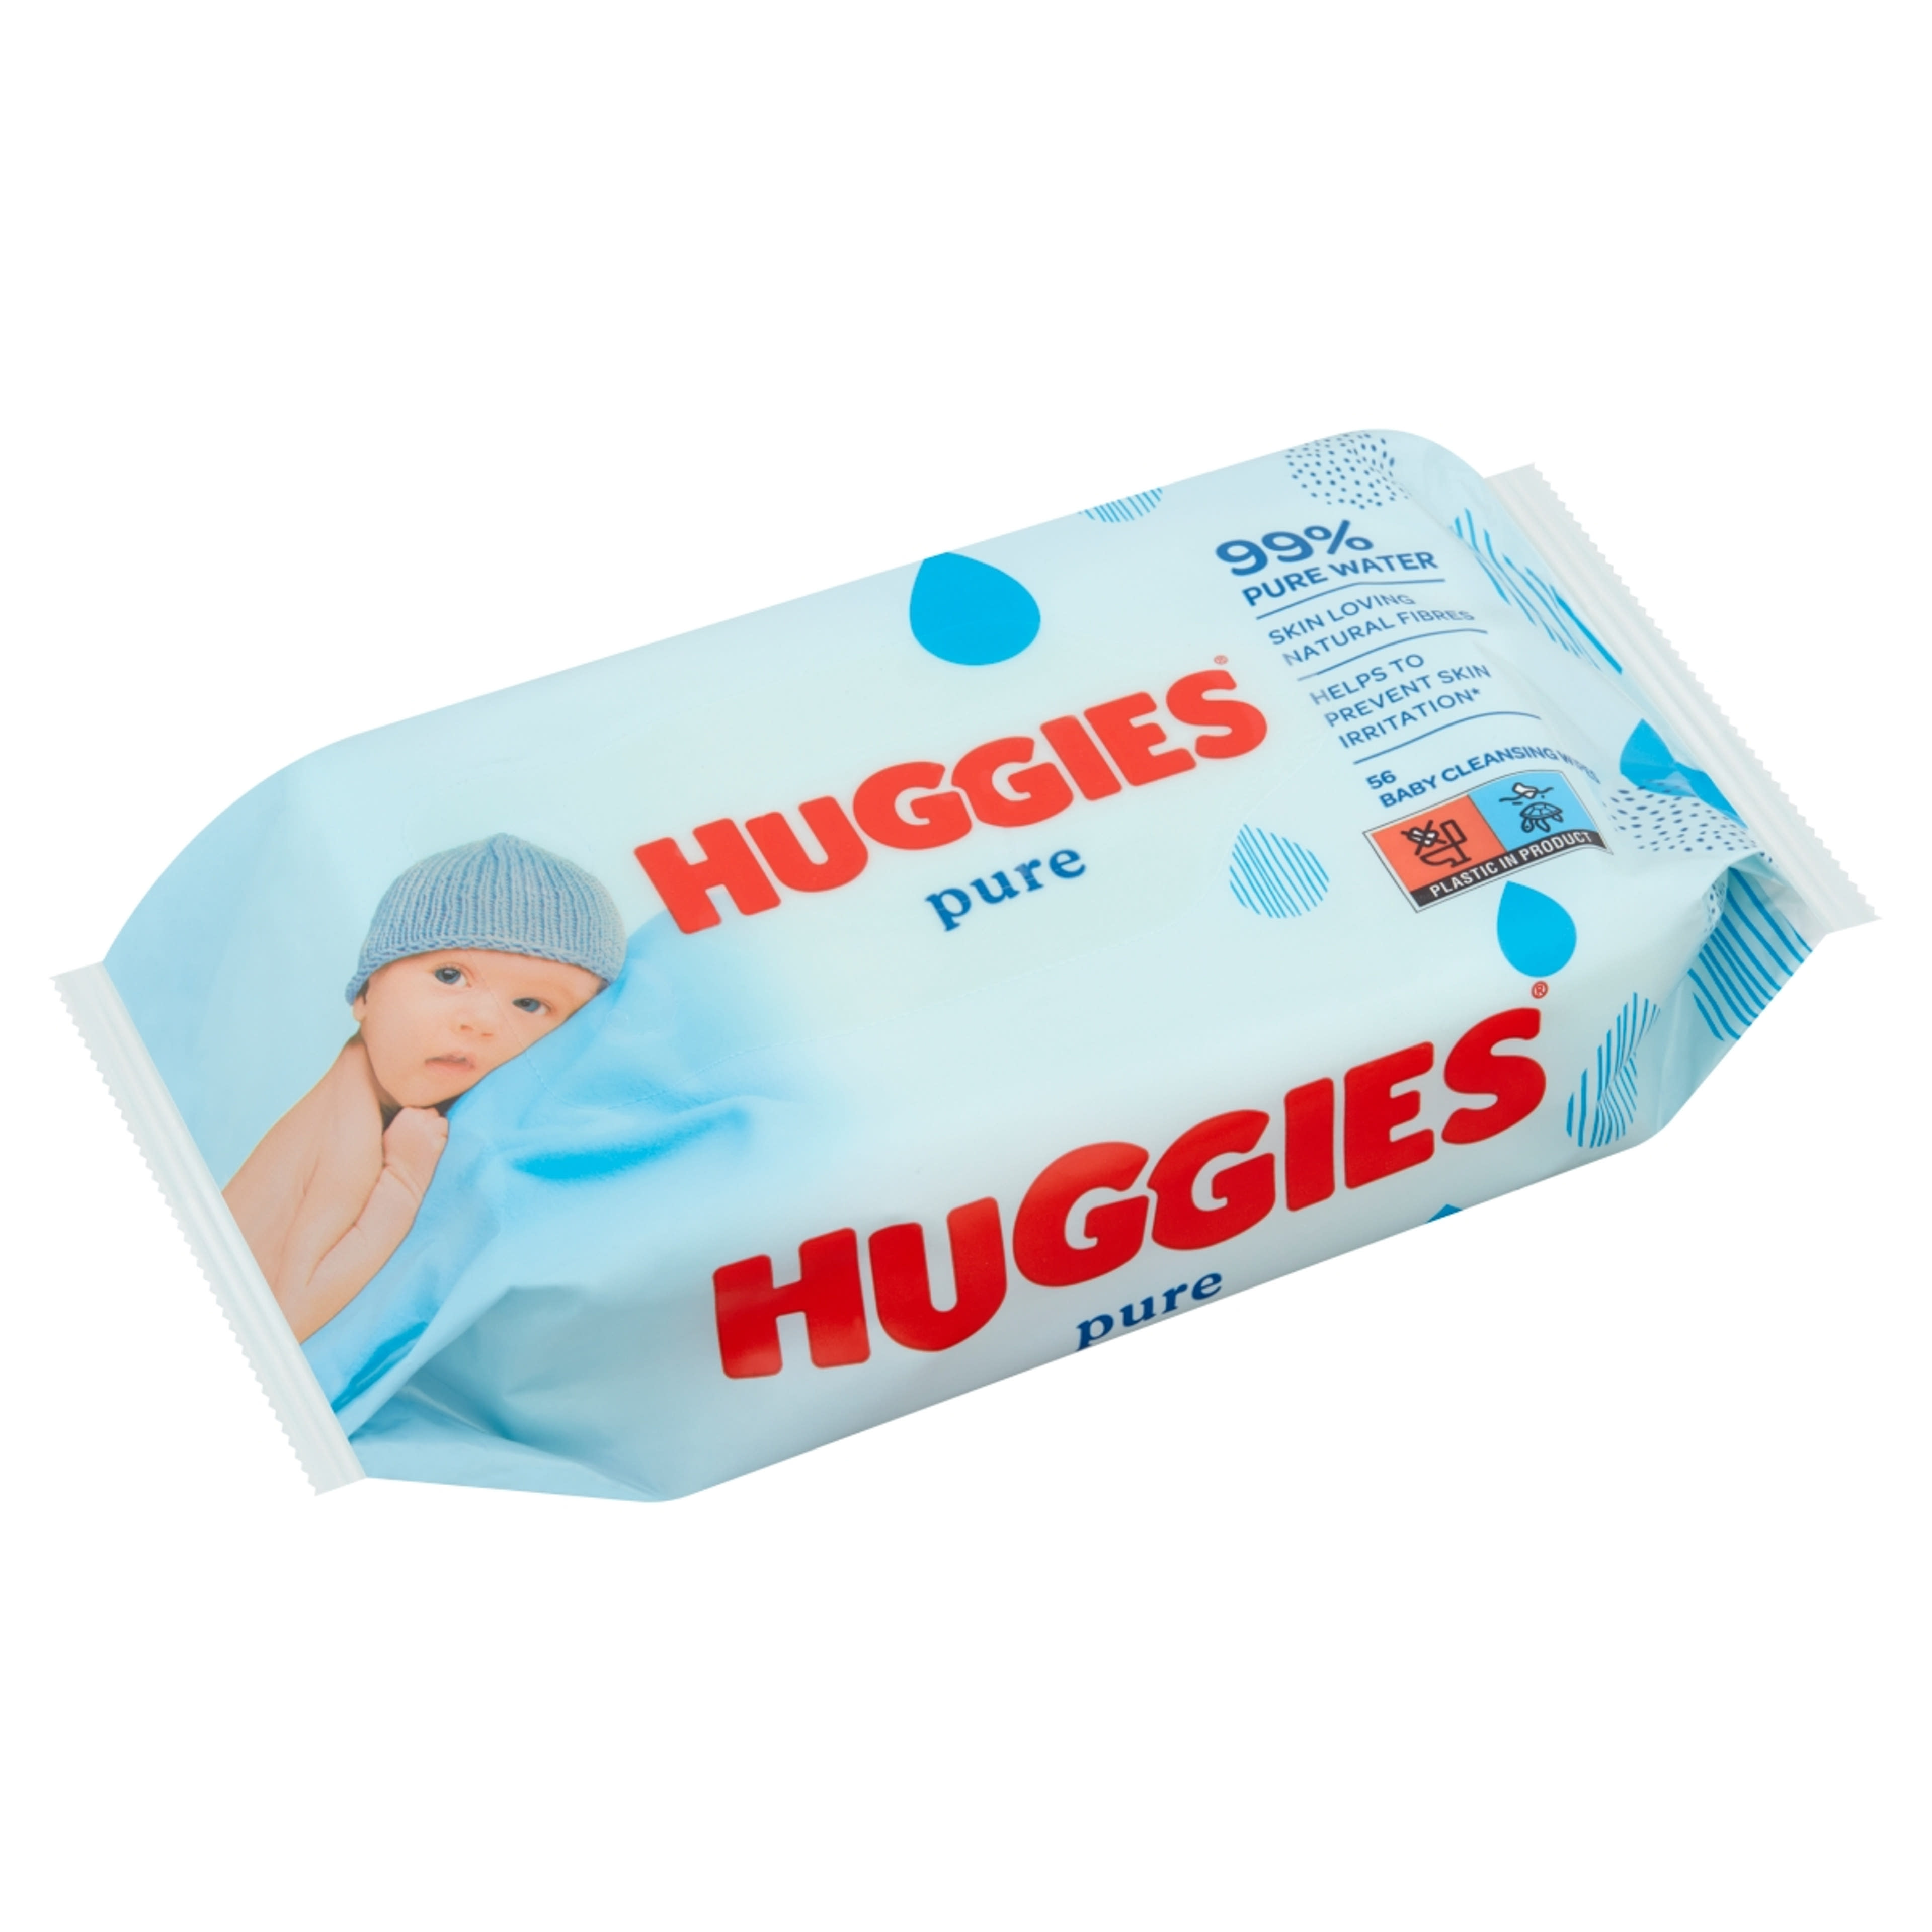 Huggies Pure törlőkendő - 56 db-2